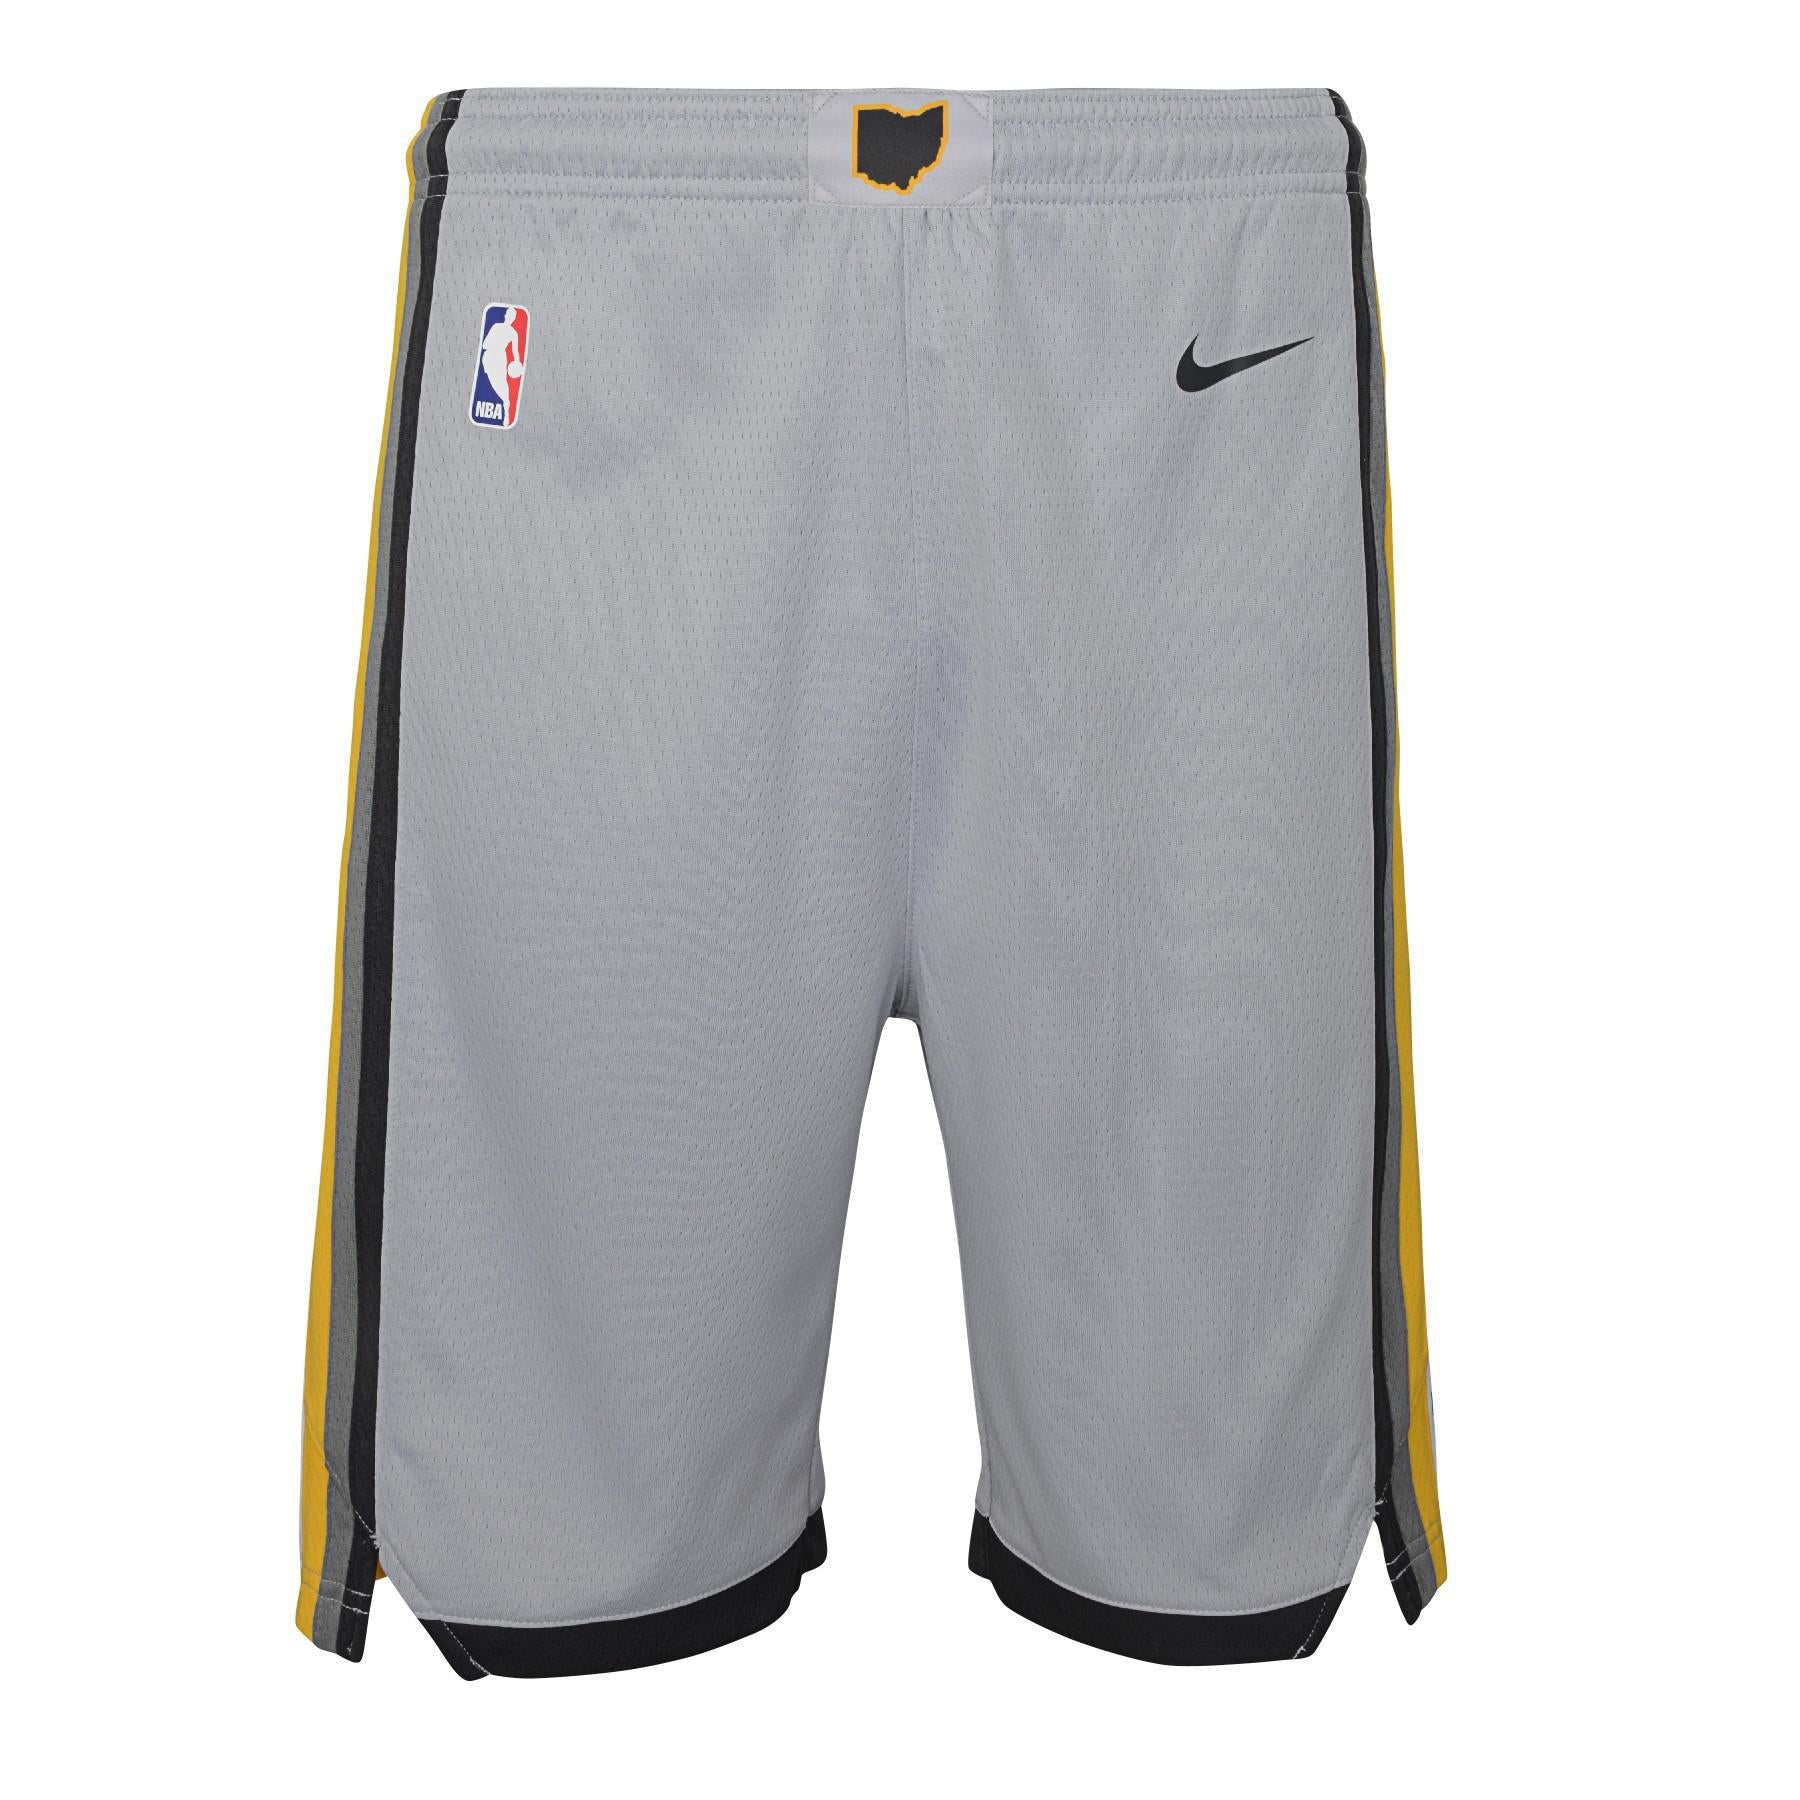 NBA Cleveland Cavaliers Practice Short Sleeve Tee (Grey, Large